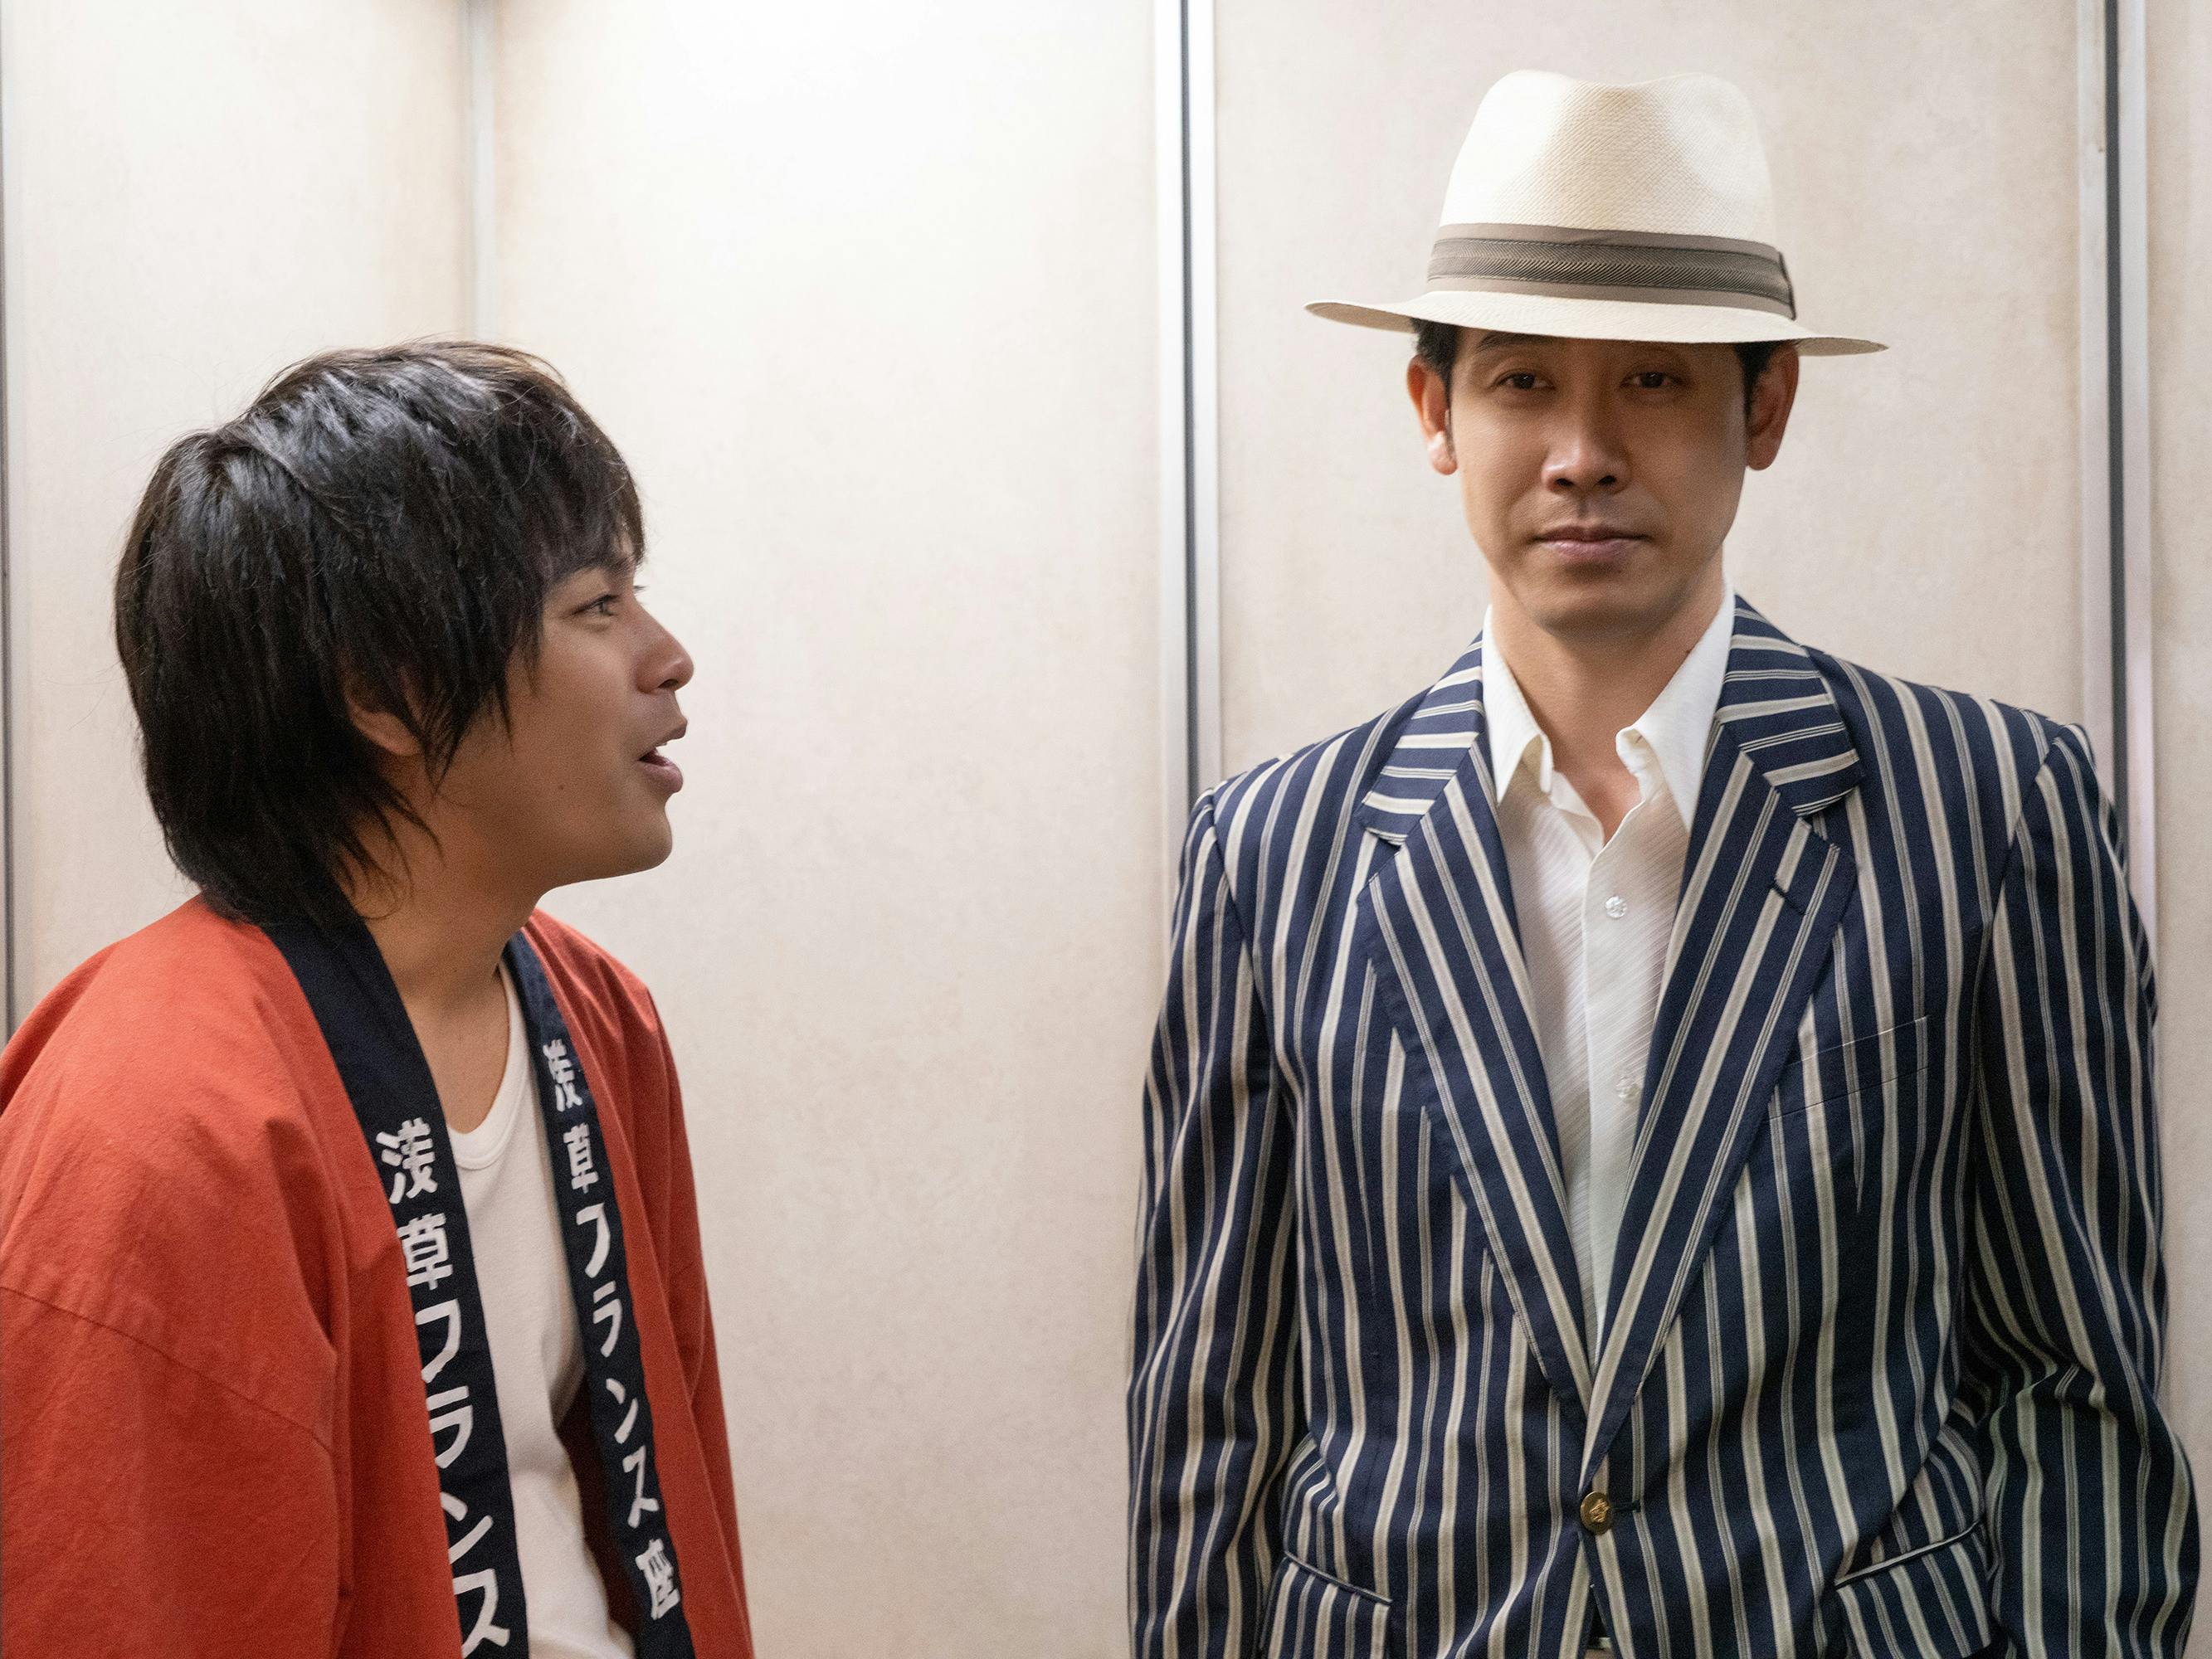 Yuya Yagira and Yo Oizumi stand in an elevator. Yagira wears a red robe and white shirt. Oizumi wears a white shirt, white hat, and black-and-white striped blazer.